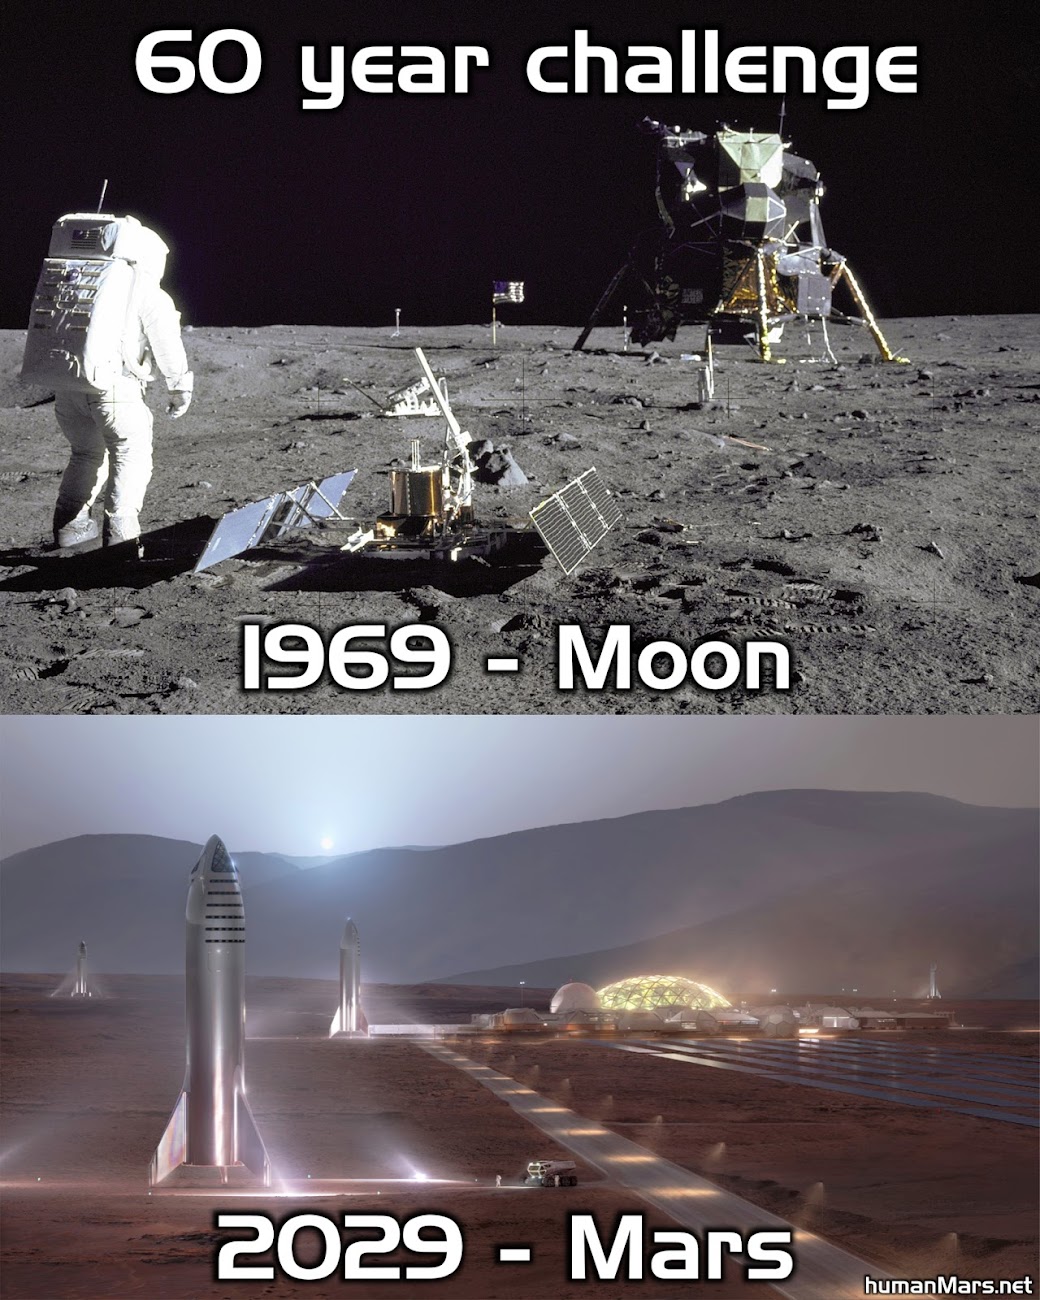 60 year challenge for humanity: 1969 - Moon, 2029 - Mars